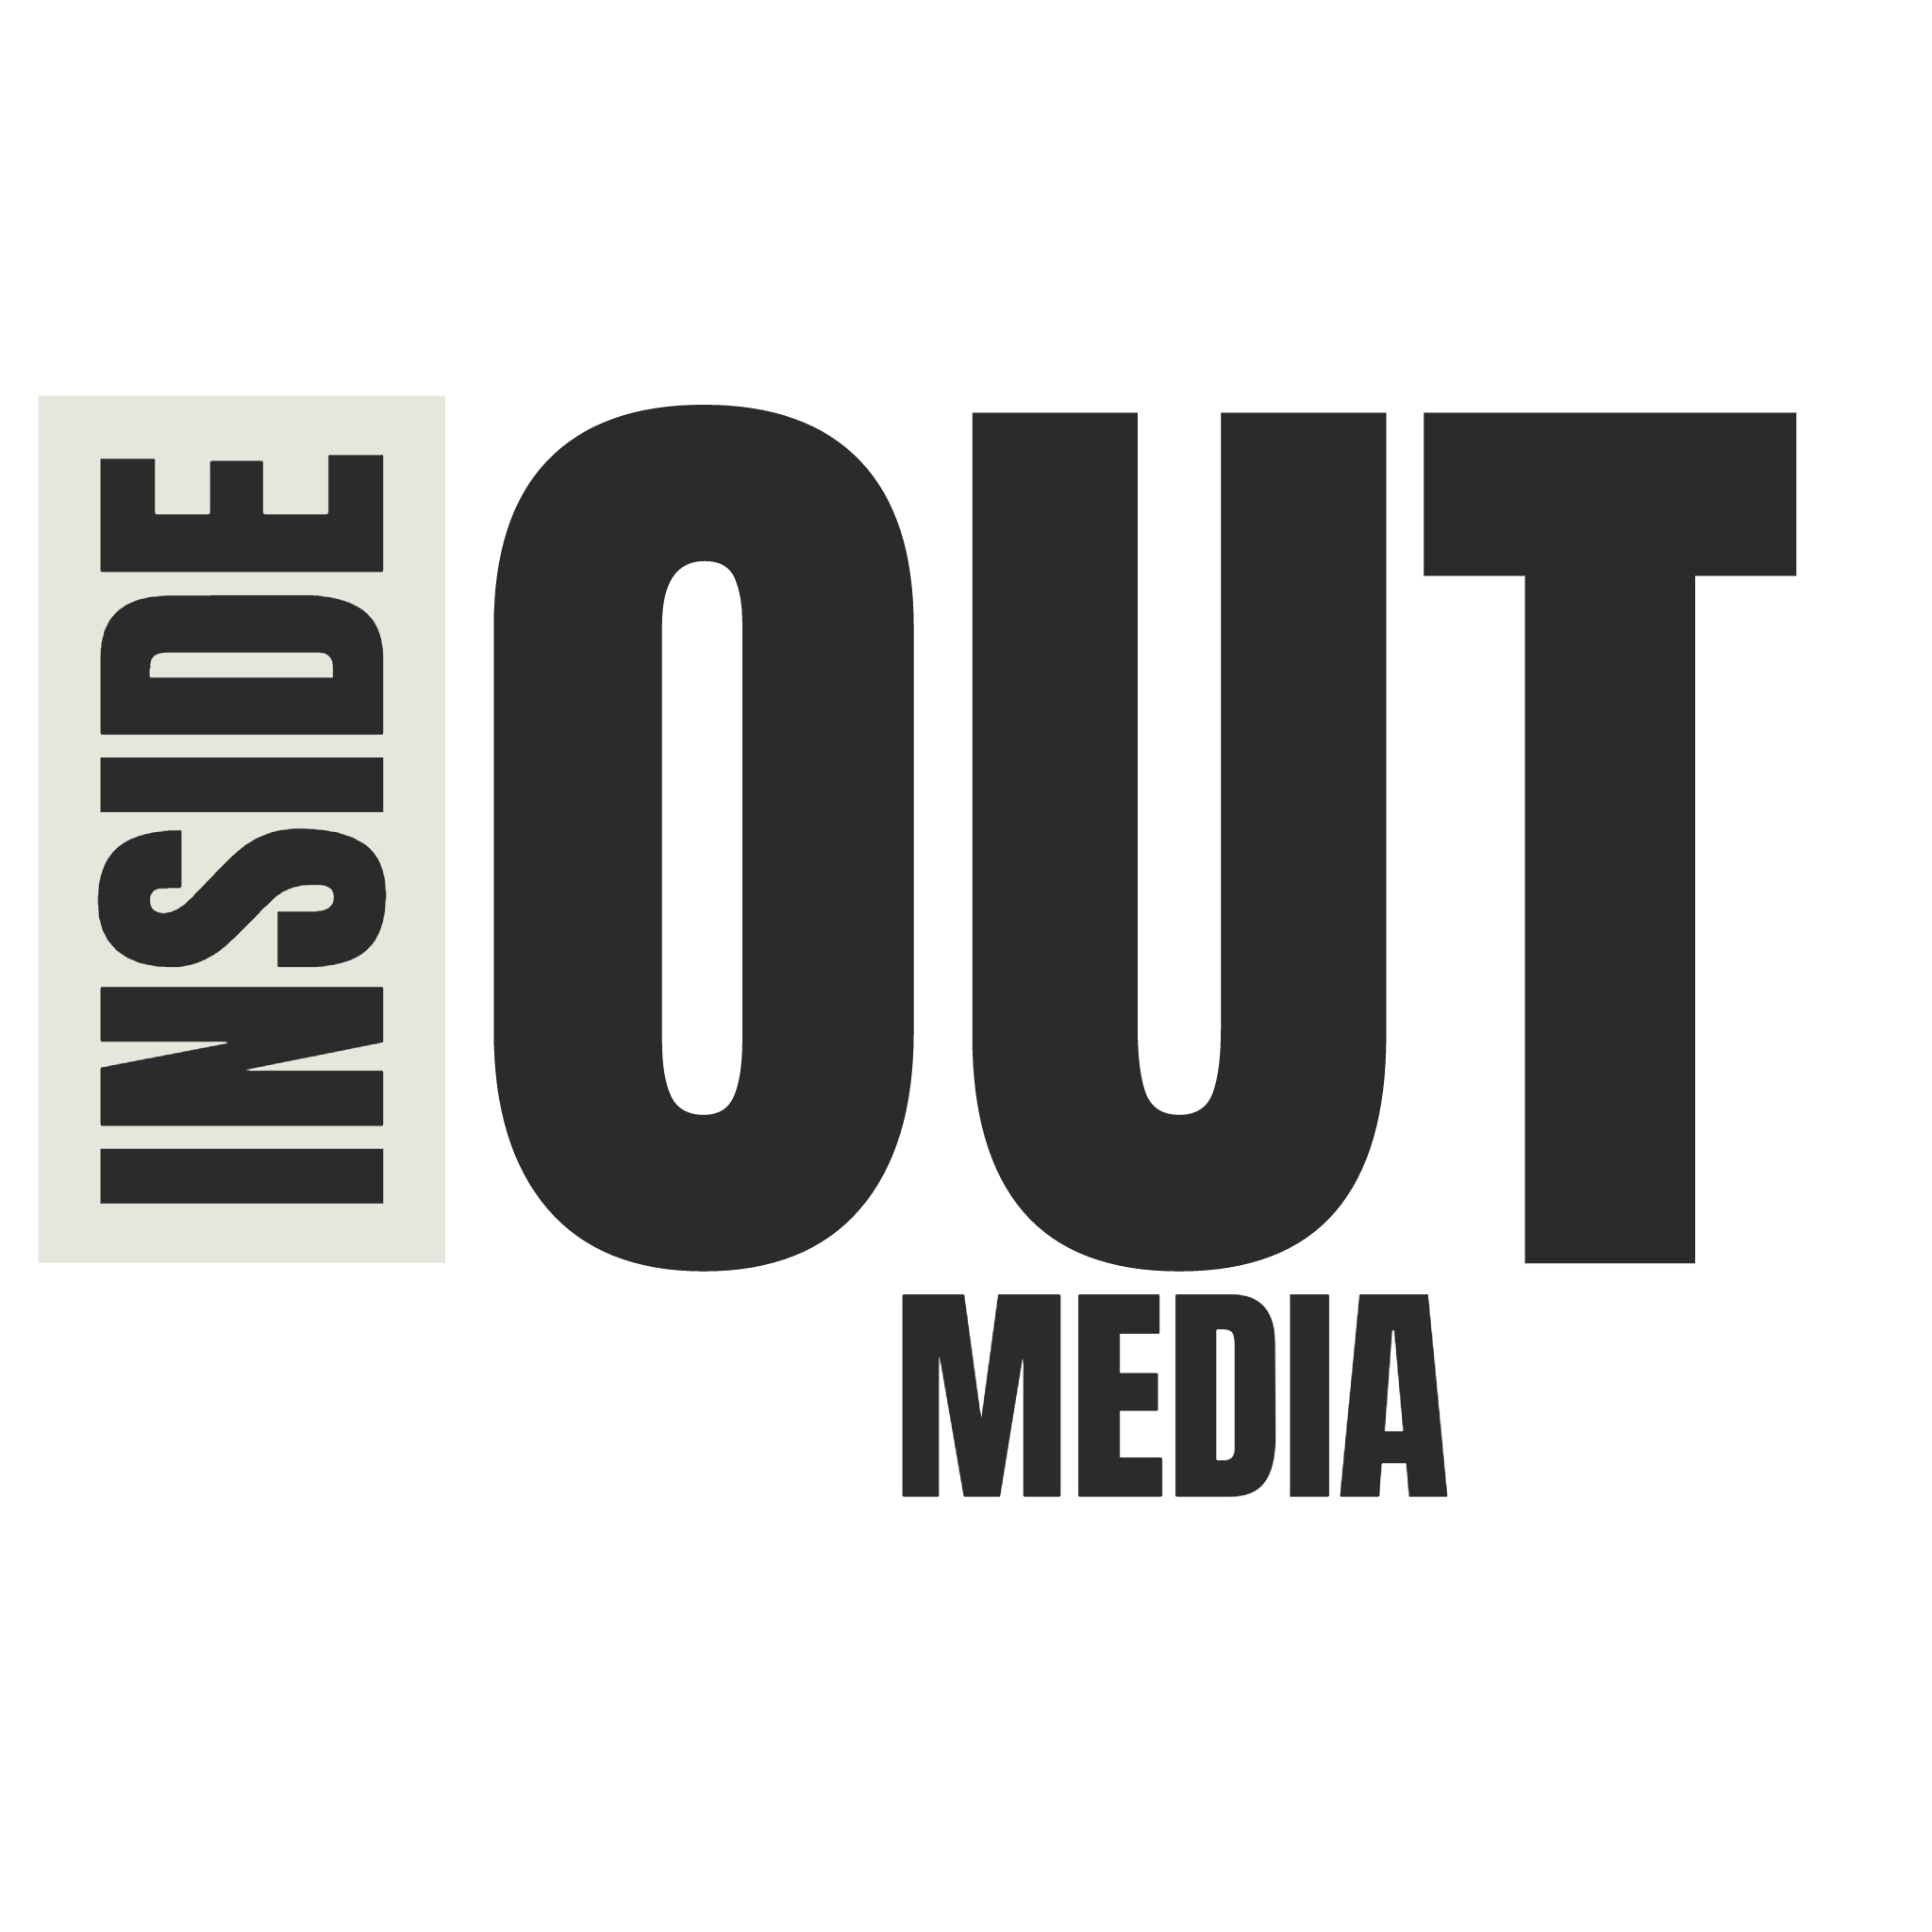 Inside out media logo transparent